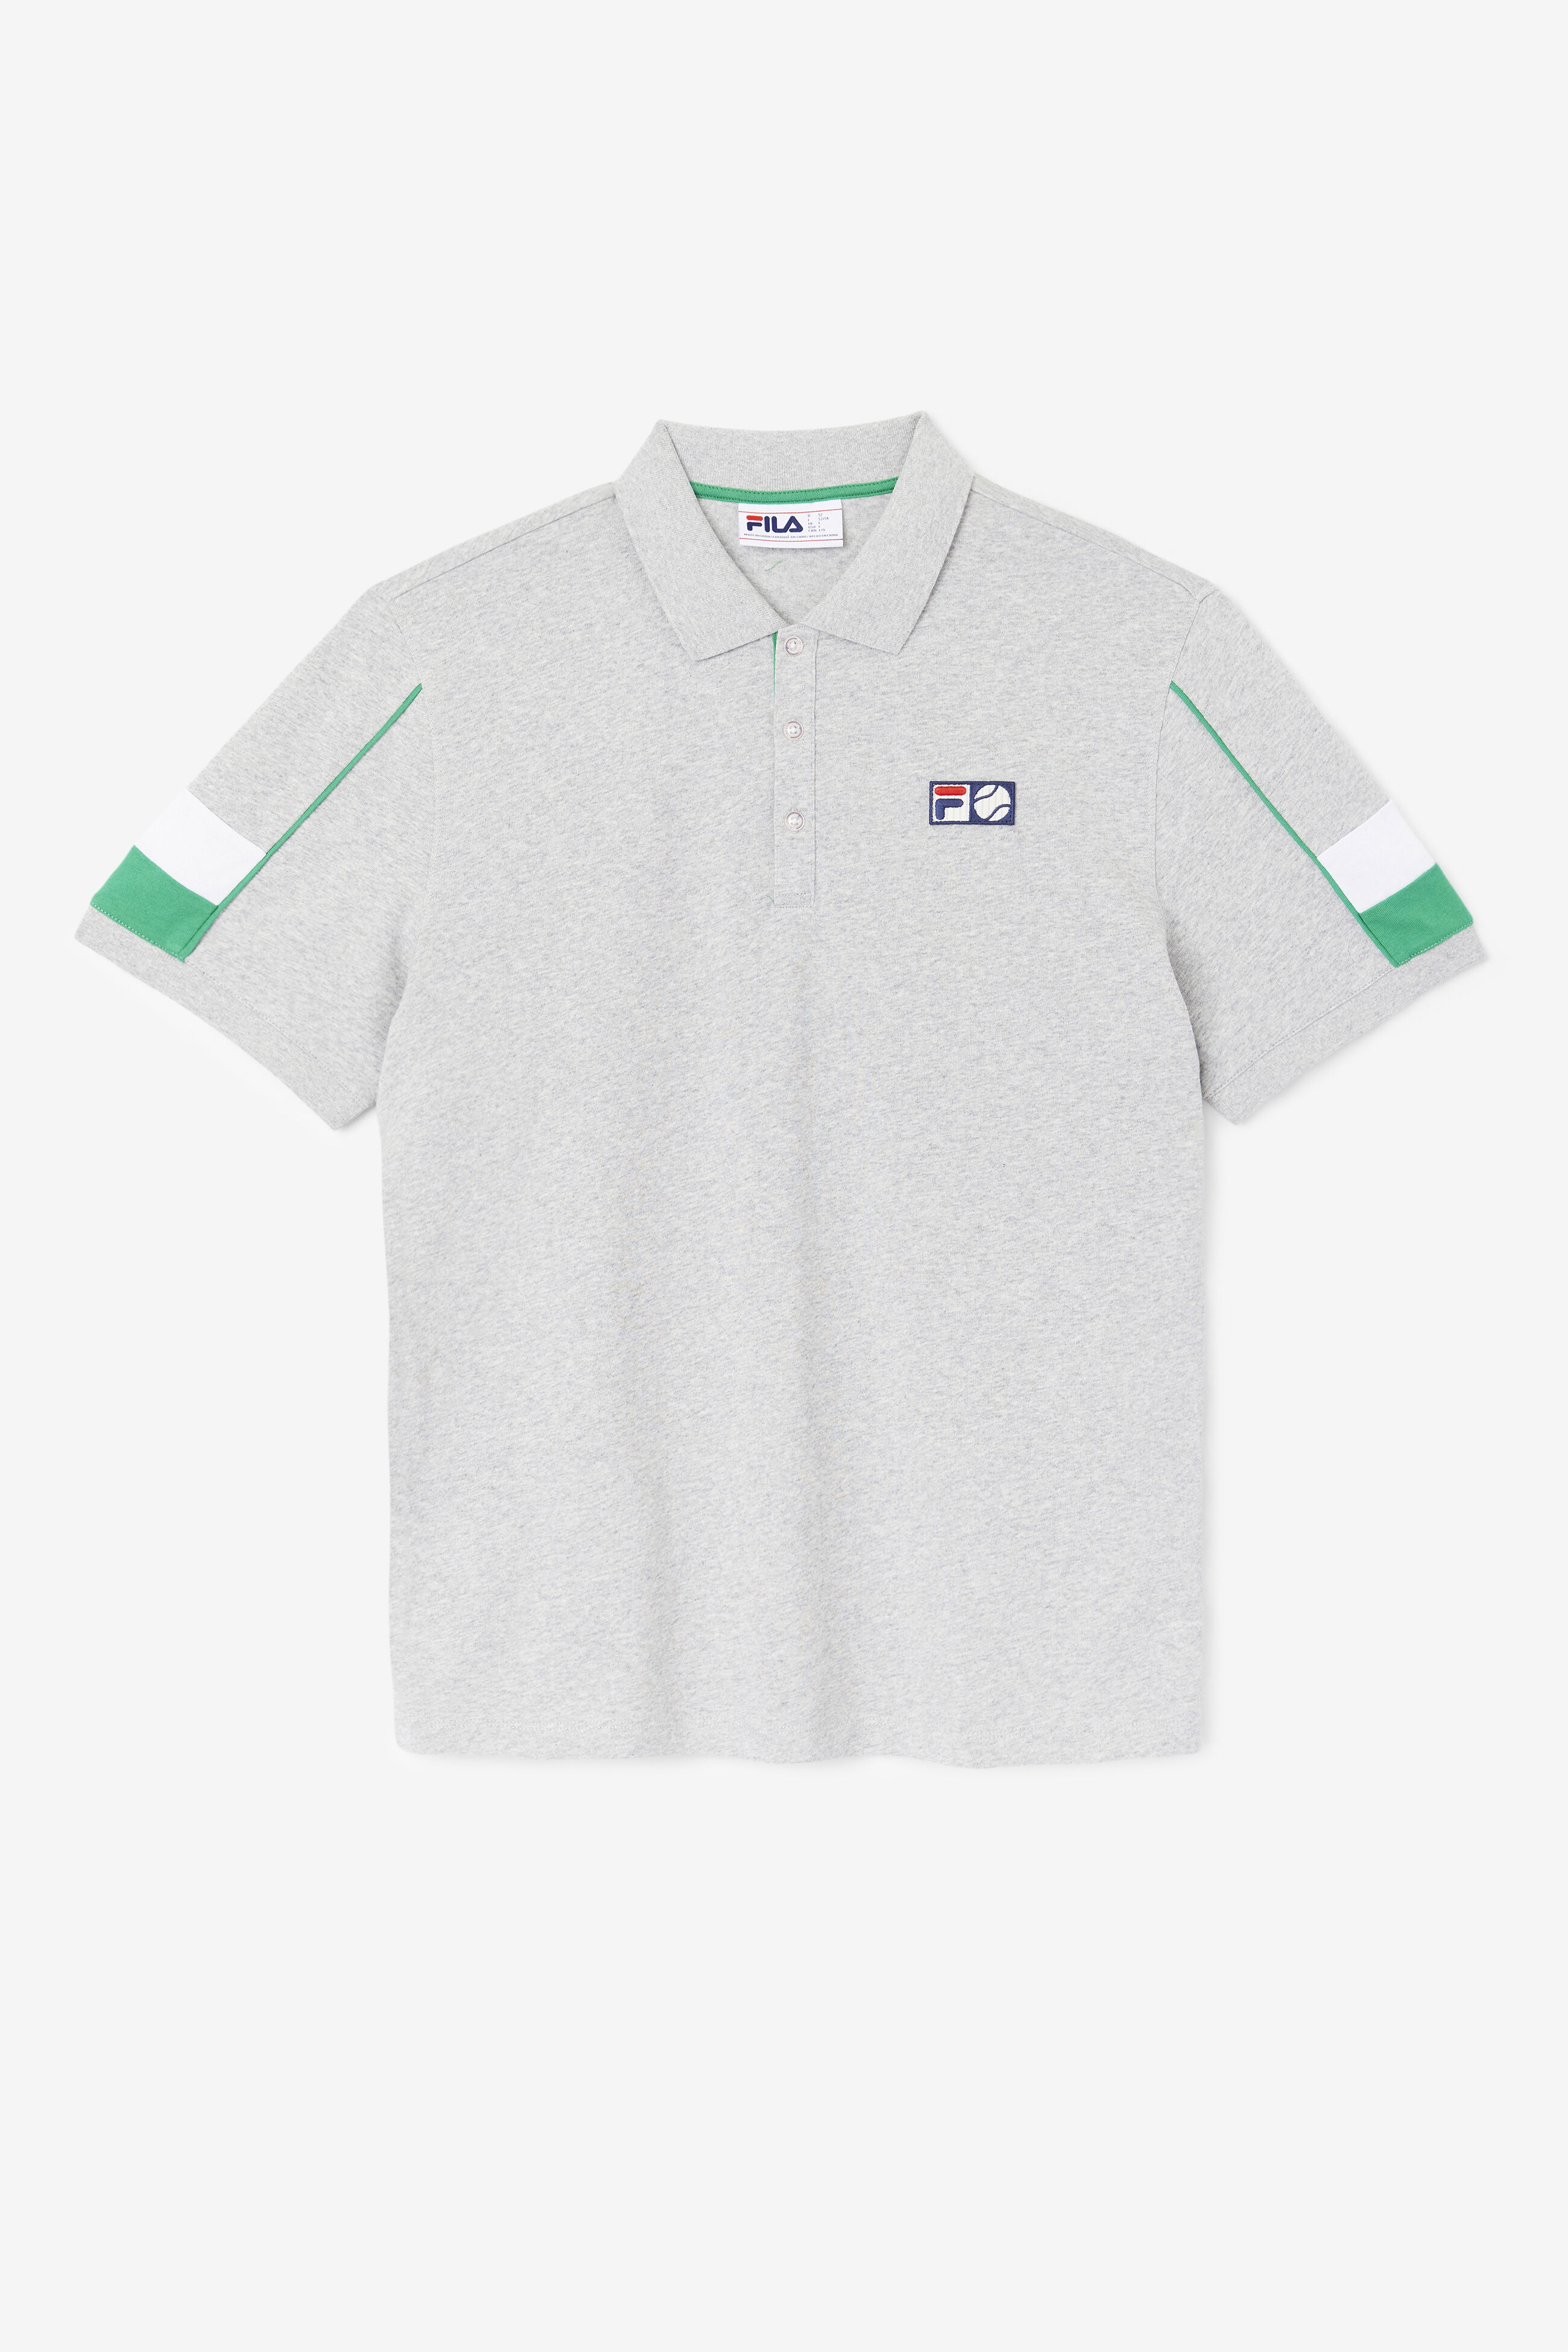 Coda 100% Organic Cotton Men's Polo Shirt | Fila 789482178659